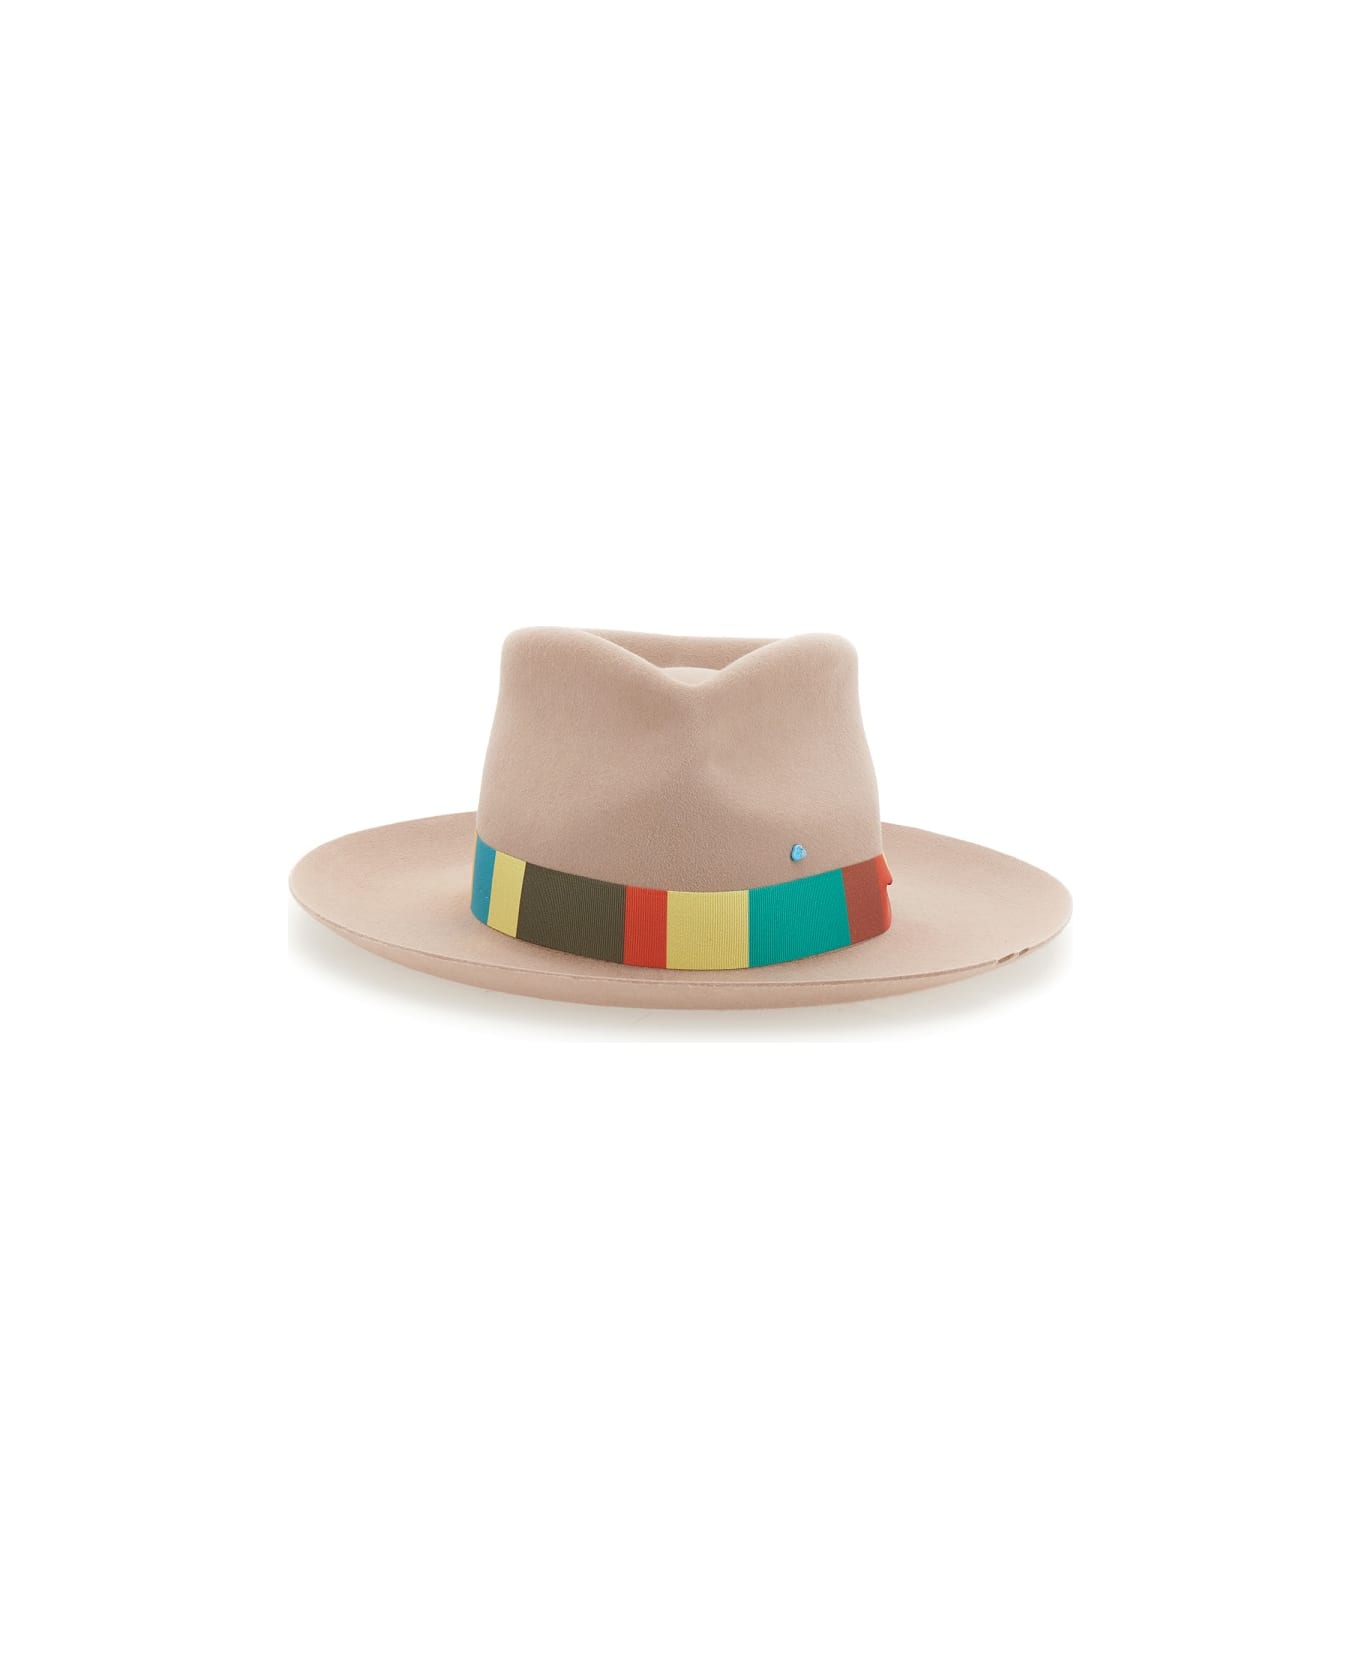 Super Duper Hats Bougainvillea Hat - BEIGE